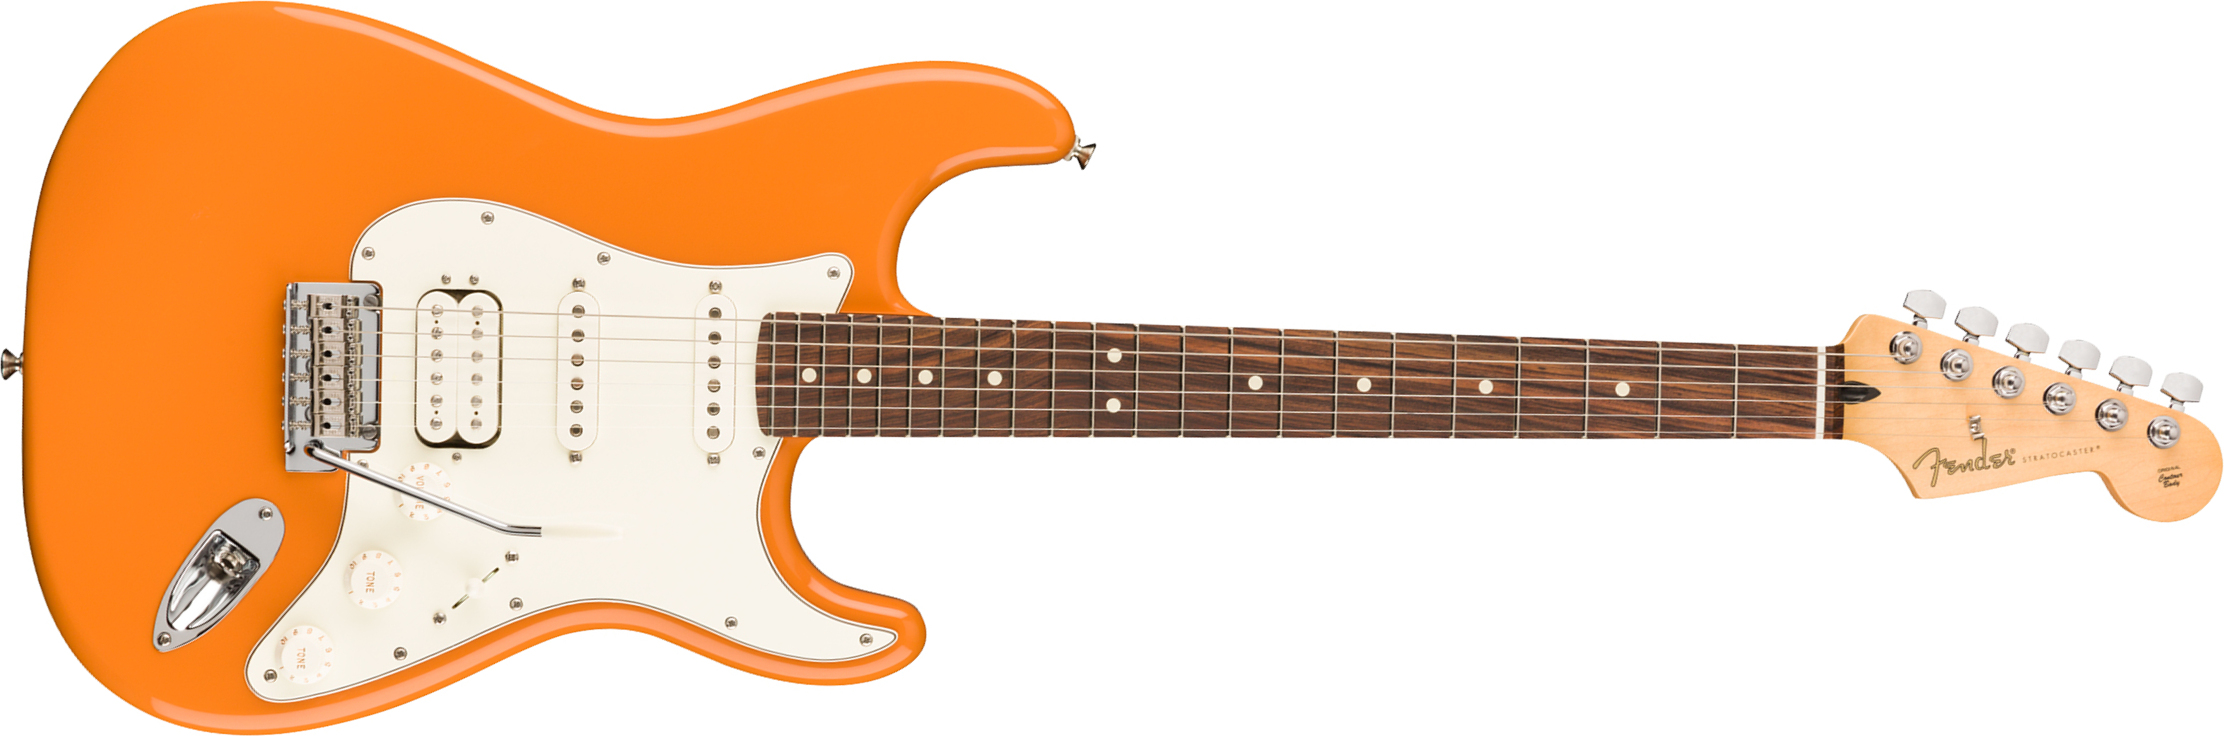 Fender Strat Player Mex Hss Pf - Capri Orange - Guitarra eléctrica con forma de str. - Main picture